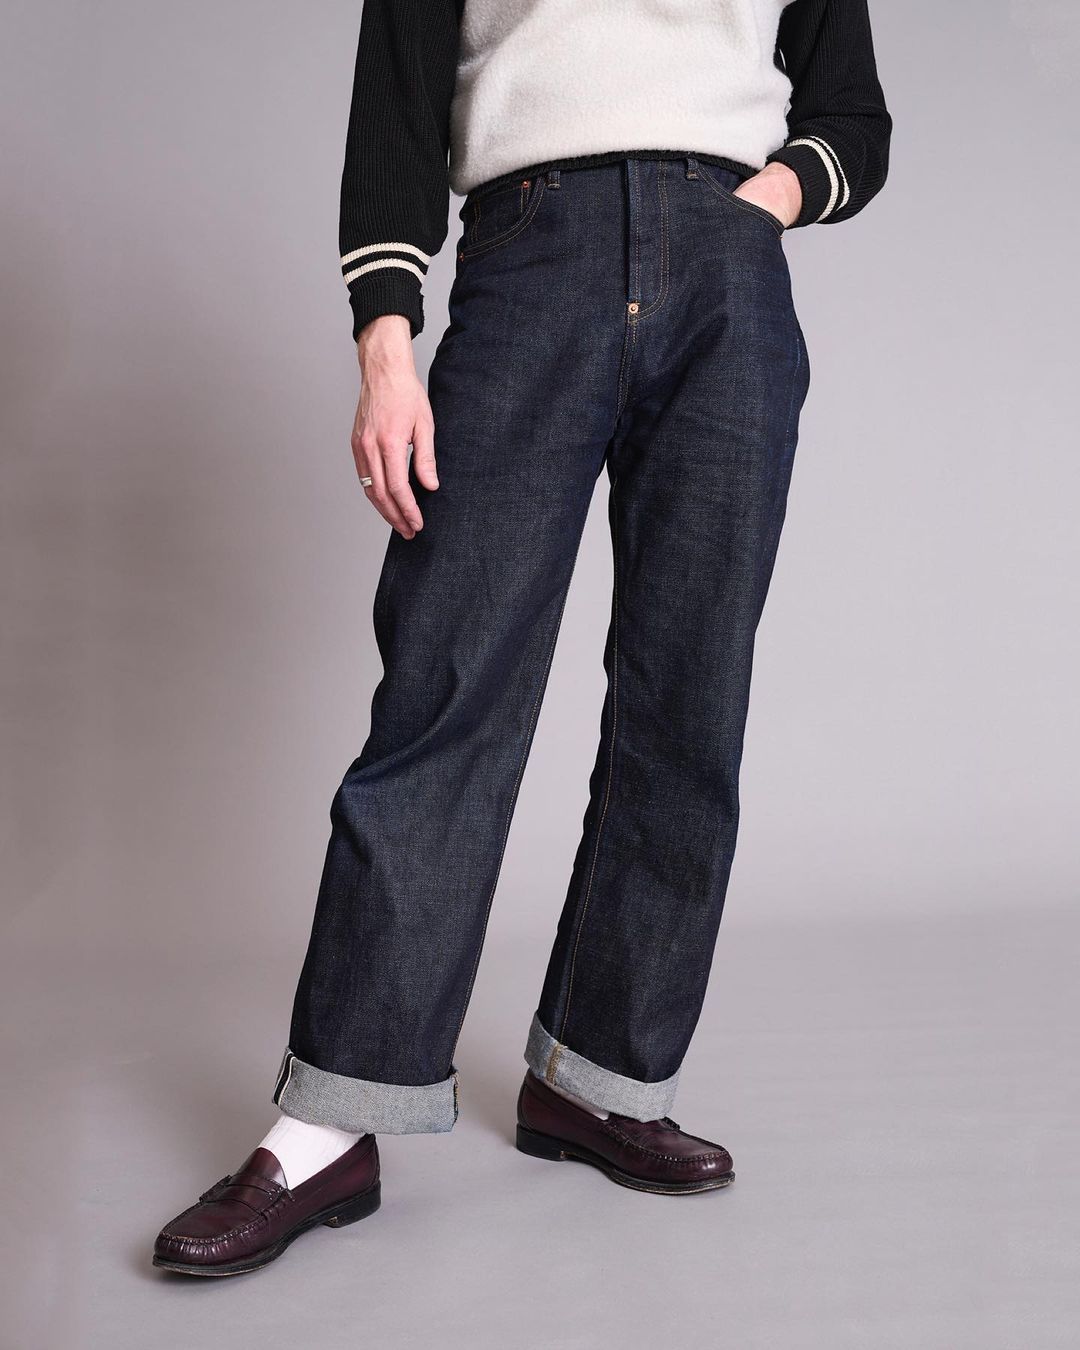 scott fraser collection jeans